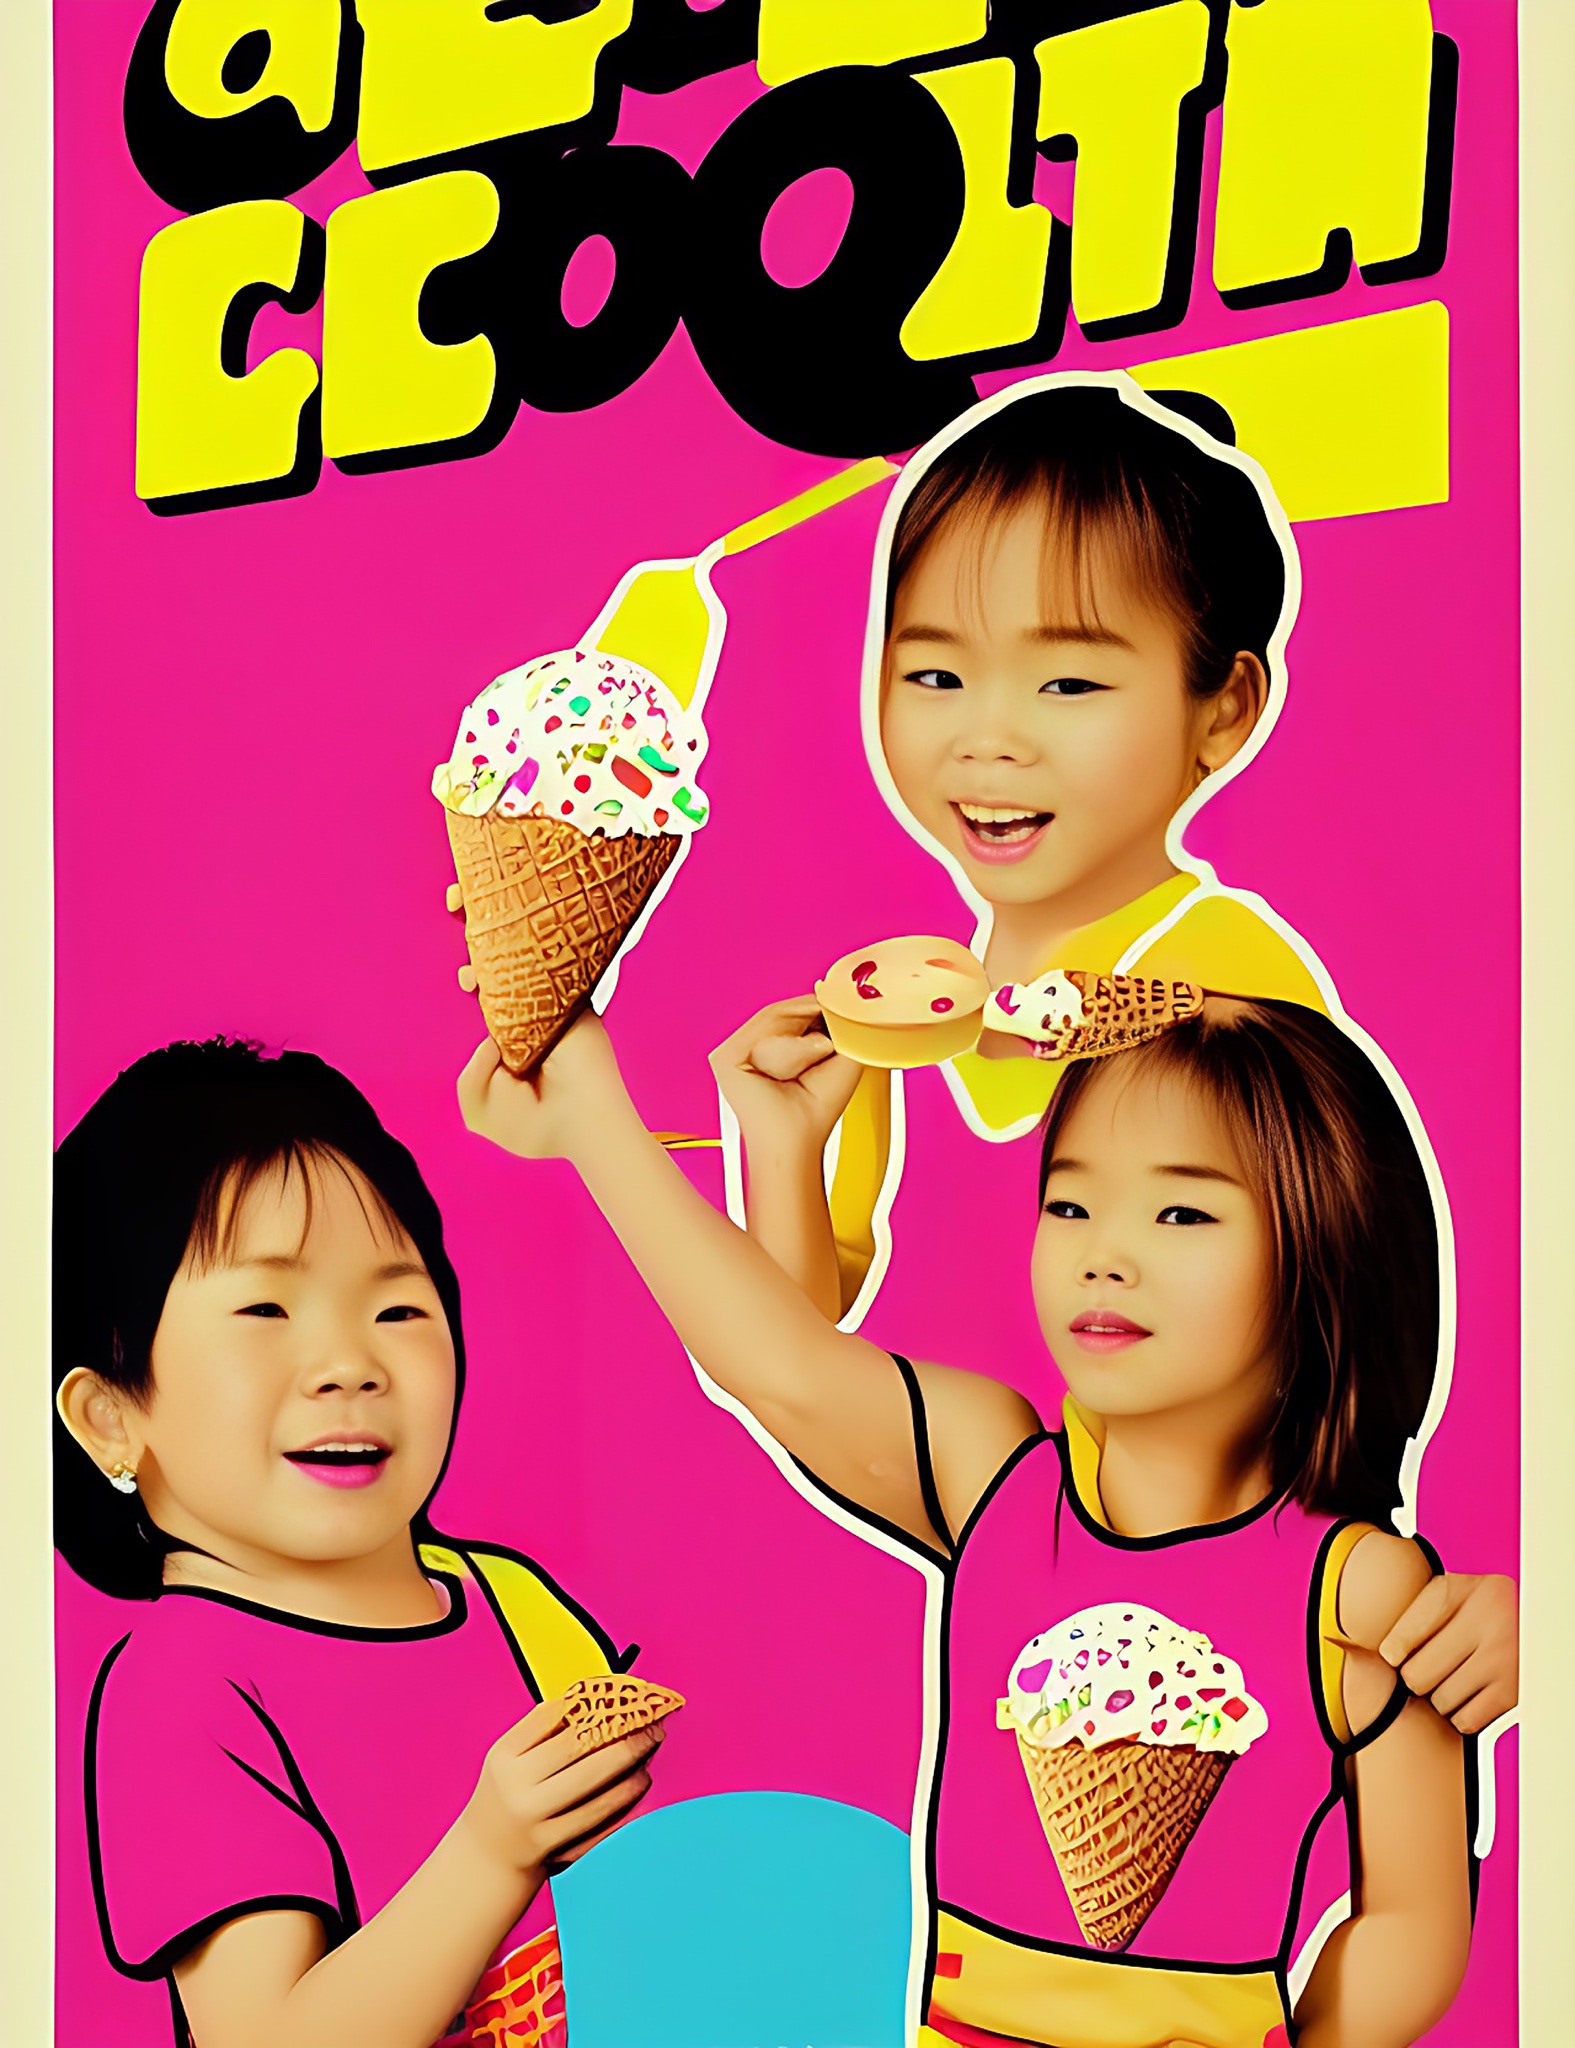 1980s-thai-poster-for-ice-cream-1